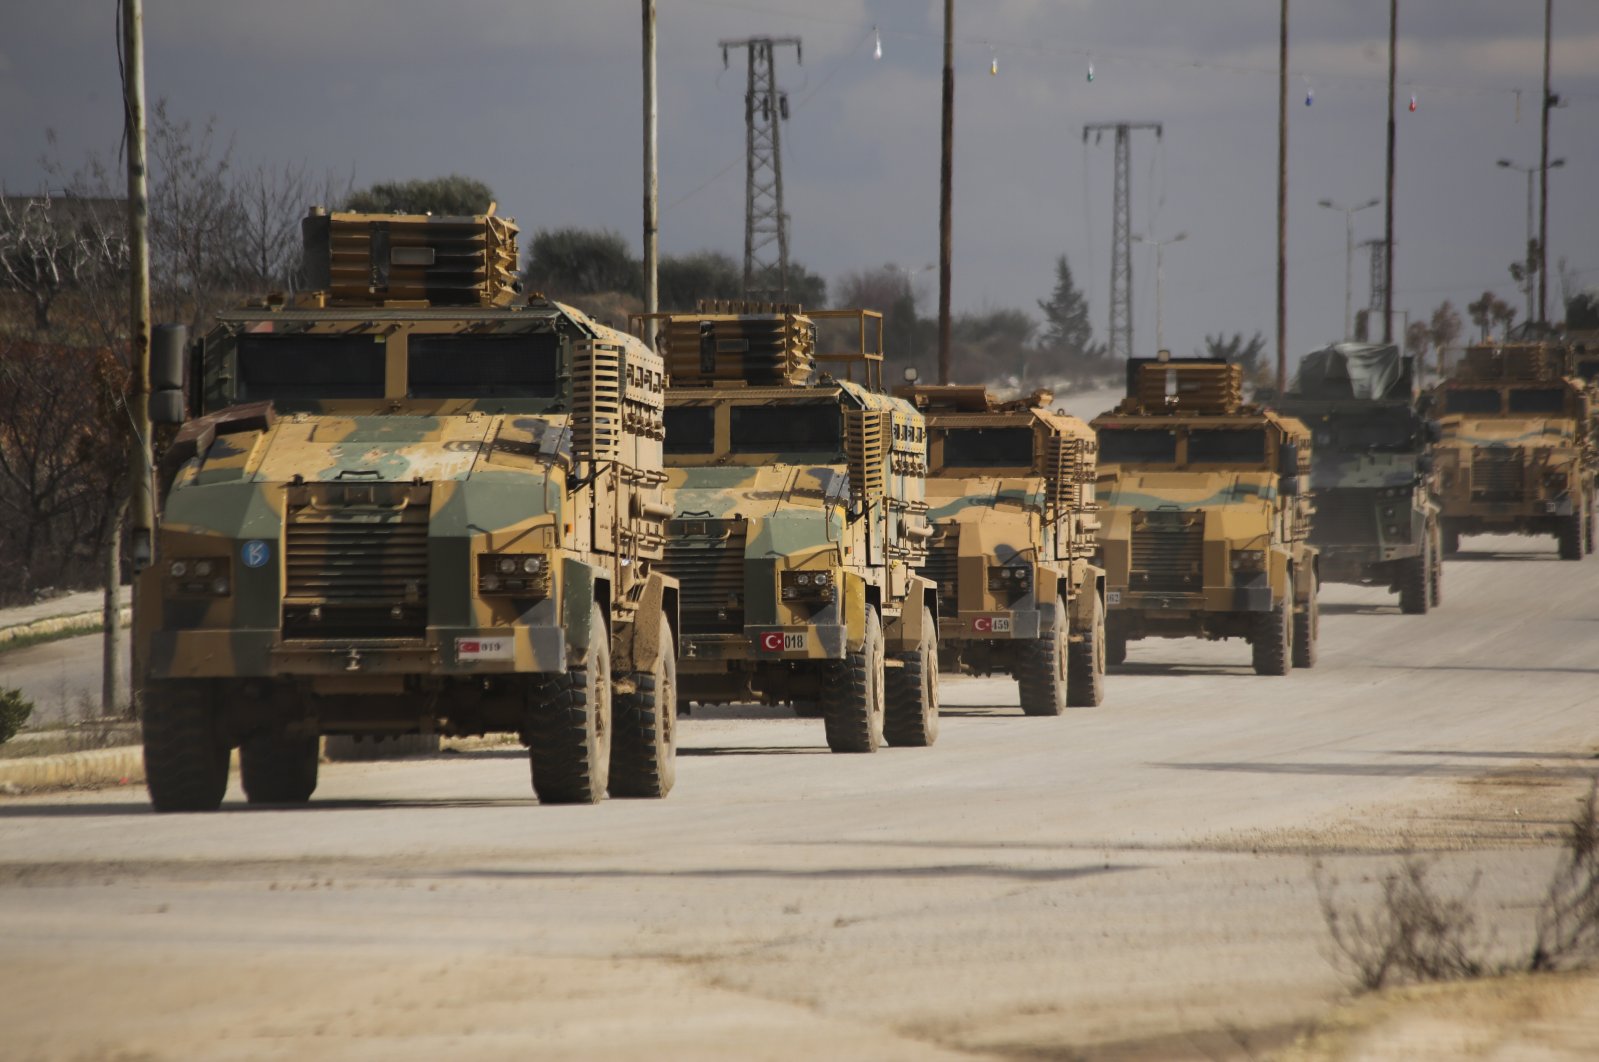 A Turkish military convoy drives in Idlib province, Syria, Feb. 22, 2020. (AP Photo)